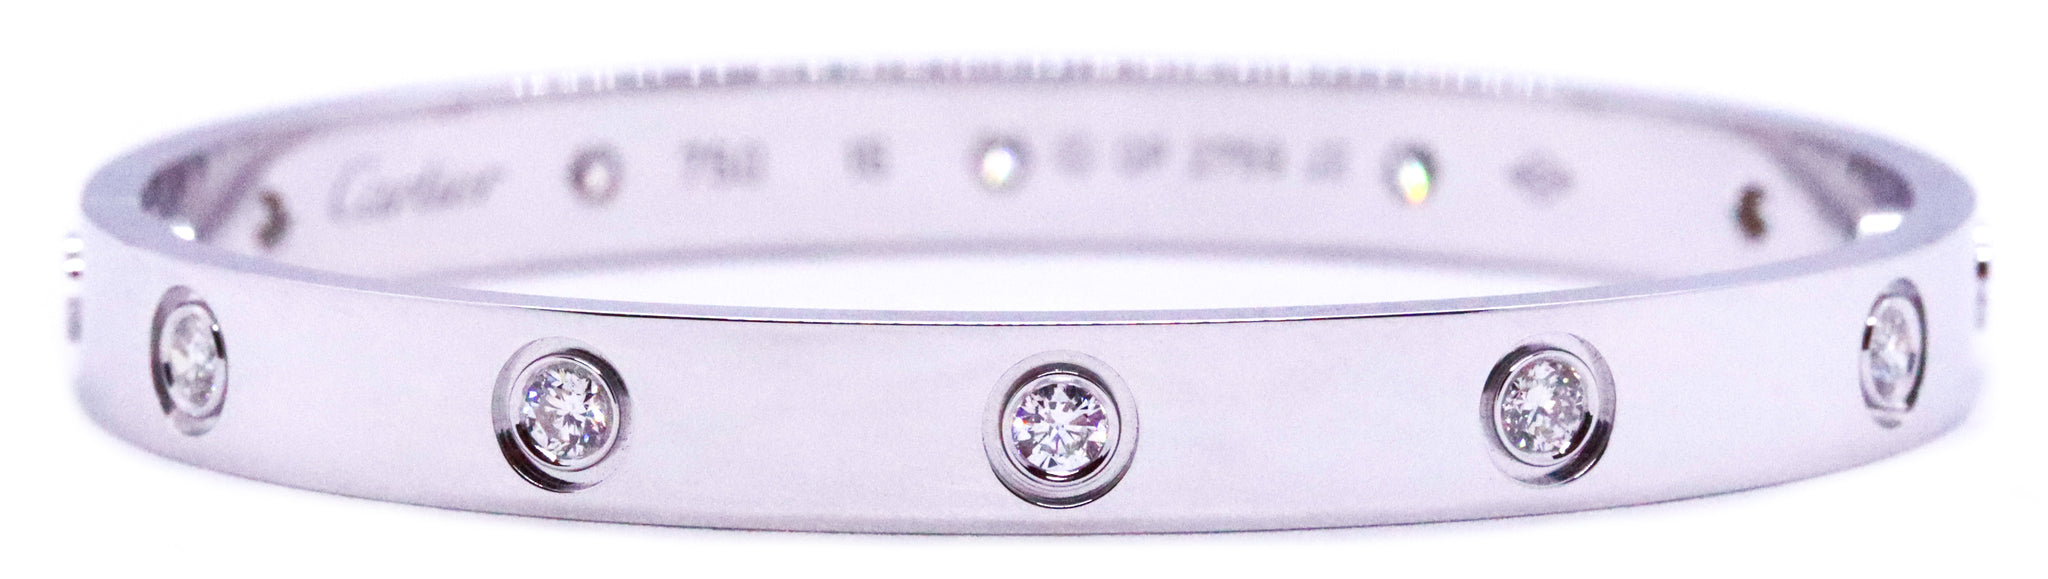 Cartier LOVE 10 Diamond Bracelet in 18k White Gold 0.96 CTW